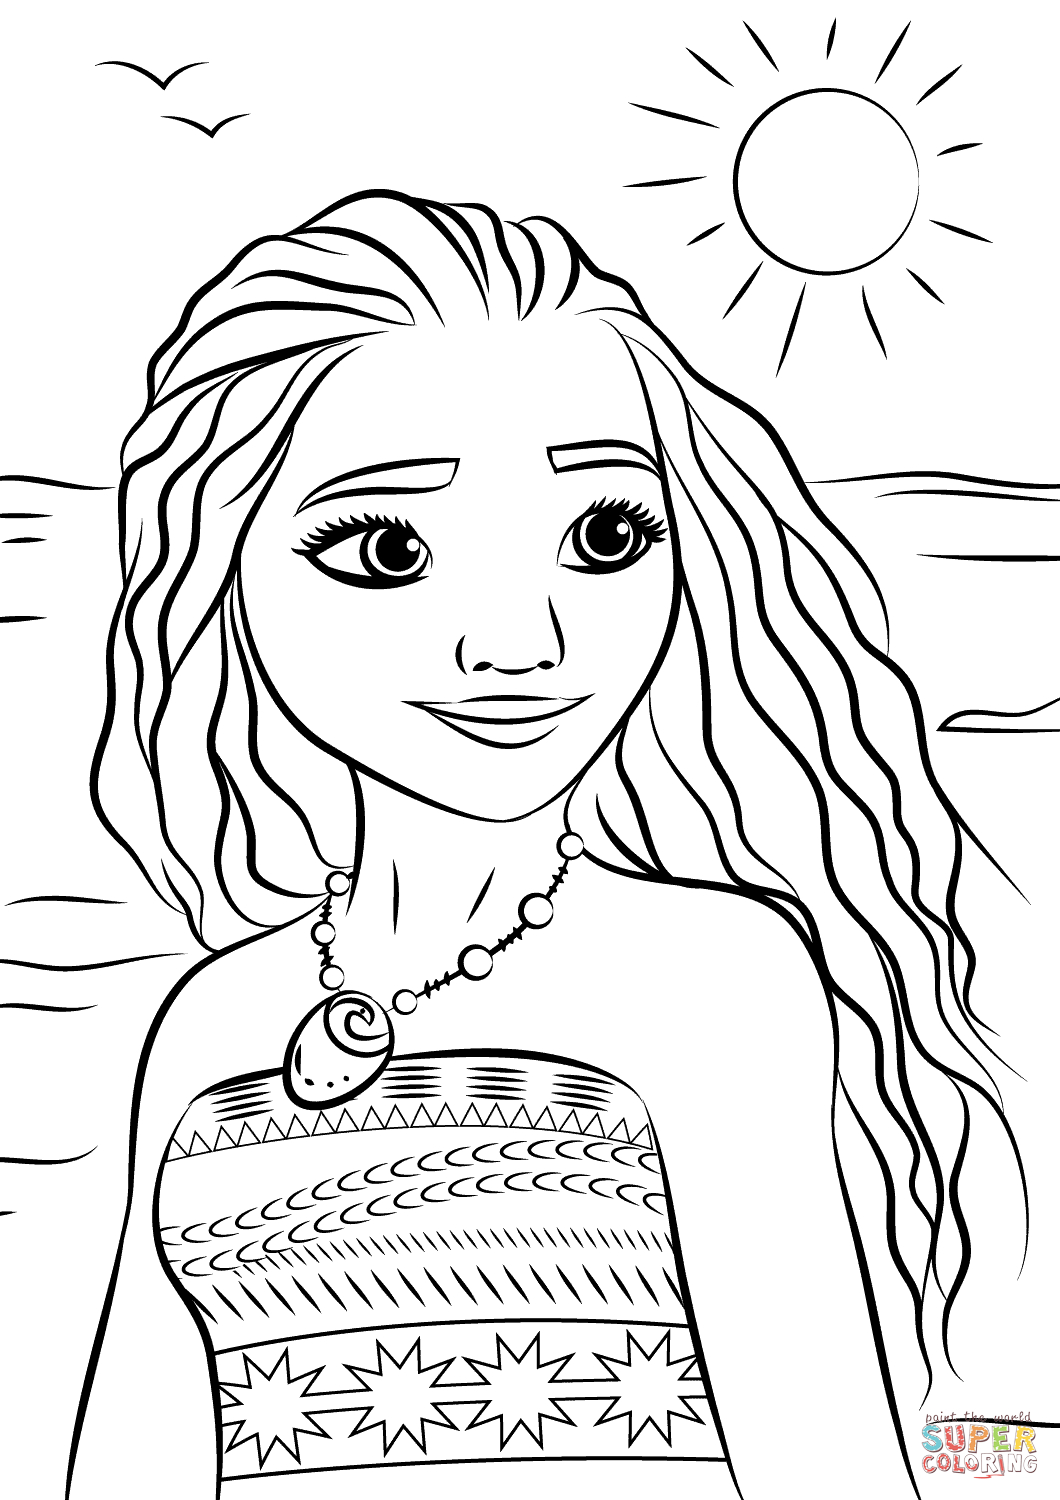 Princess Moana Portrait Coloring Page | Free Printable Coloring - Free Printable Coloring Sheets